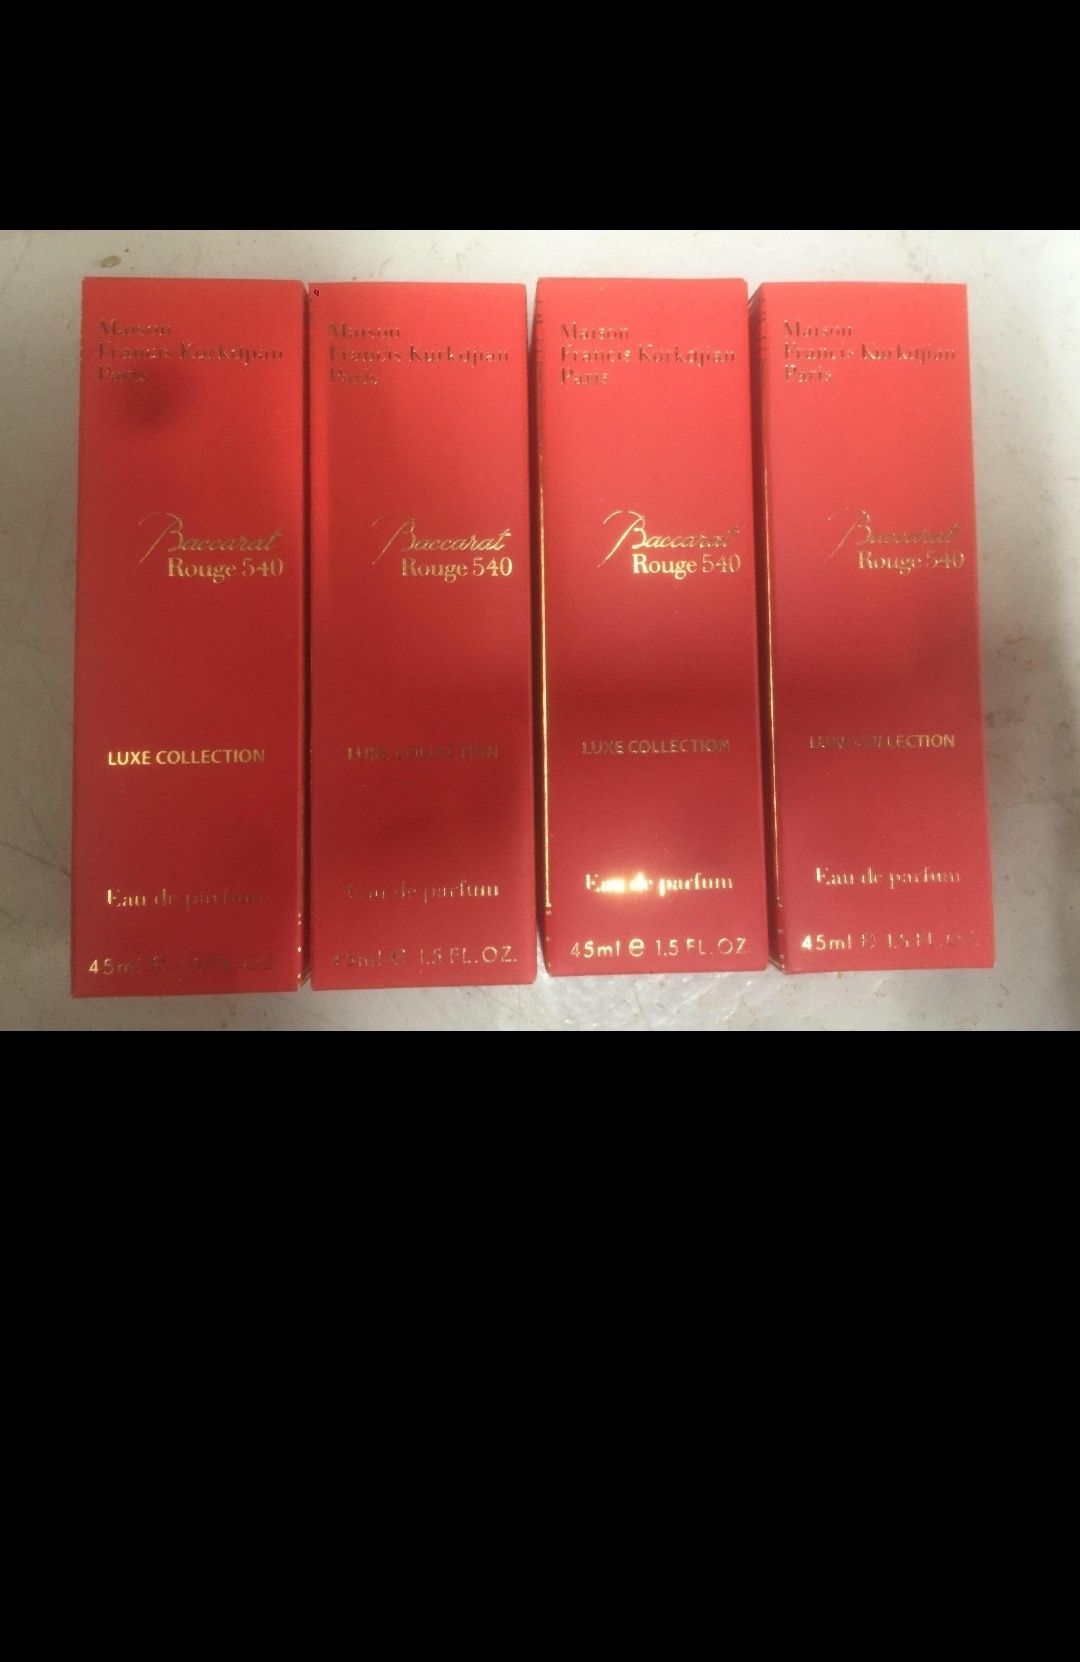 Parfum baccarat rouge 540 extract de parfum 50ml  unisex